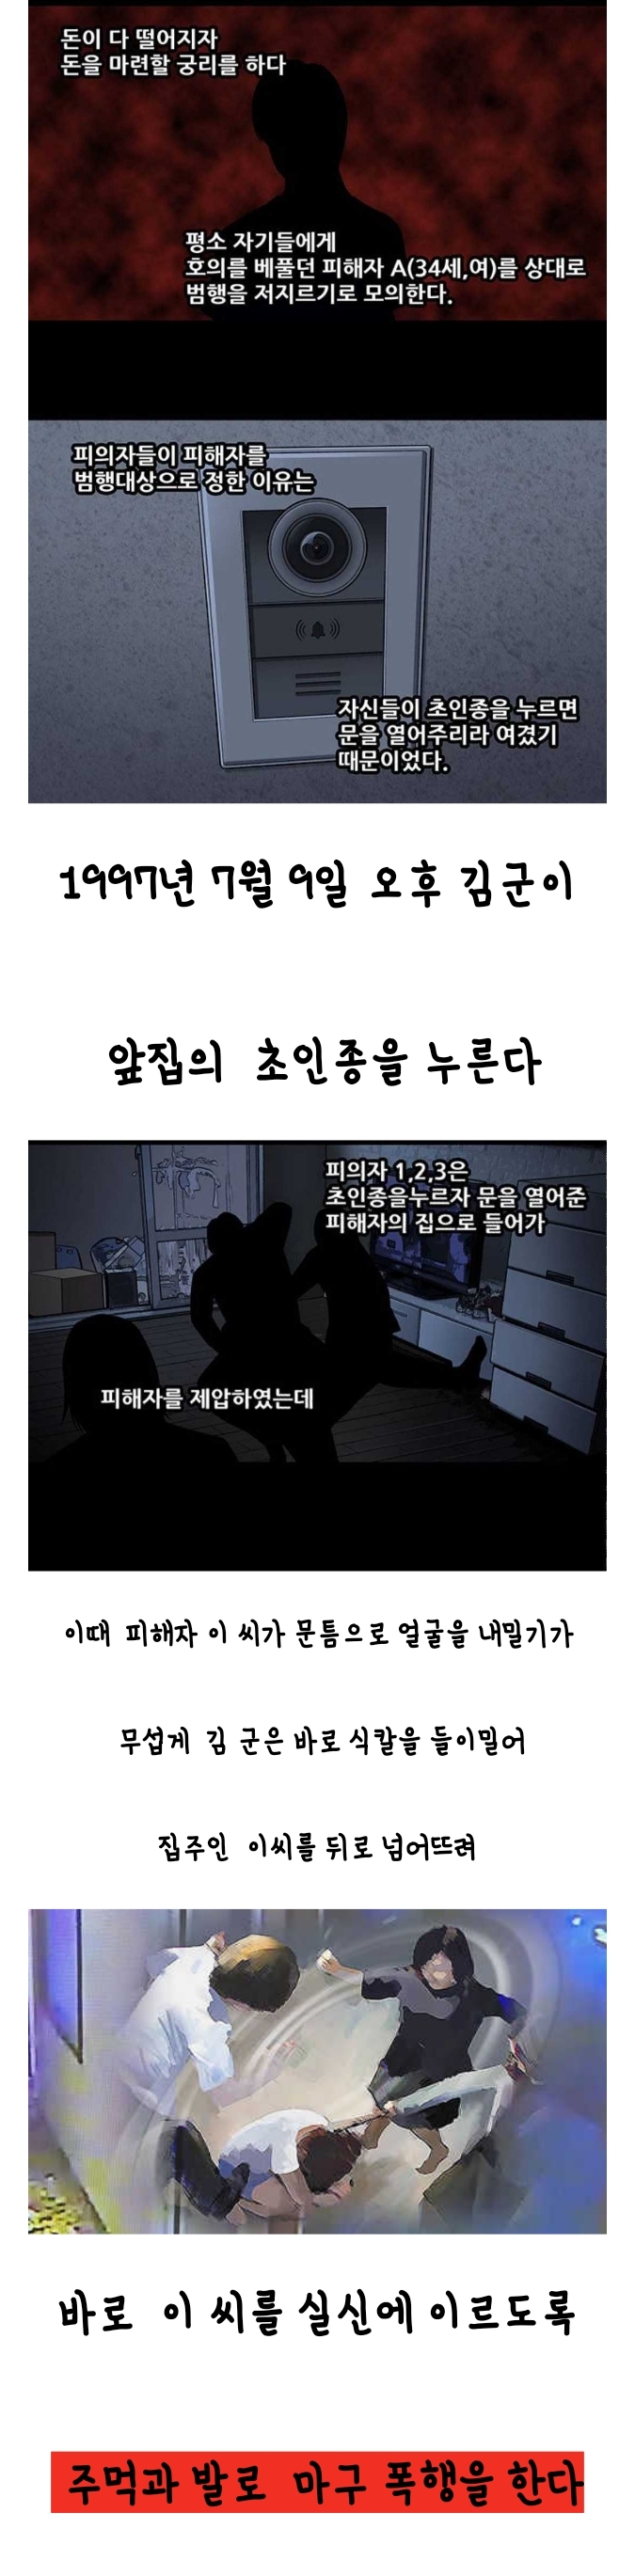 nokbeon.net-단군이래 최악의 청소년범죄-1번 이미지